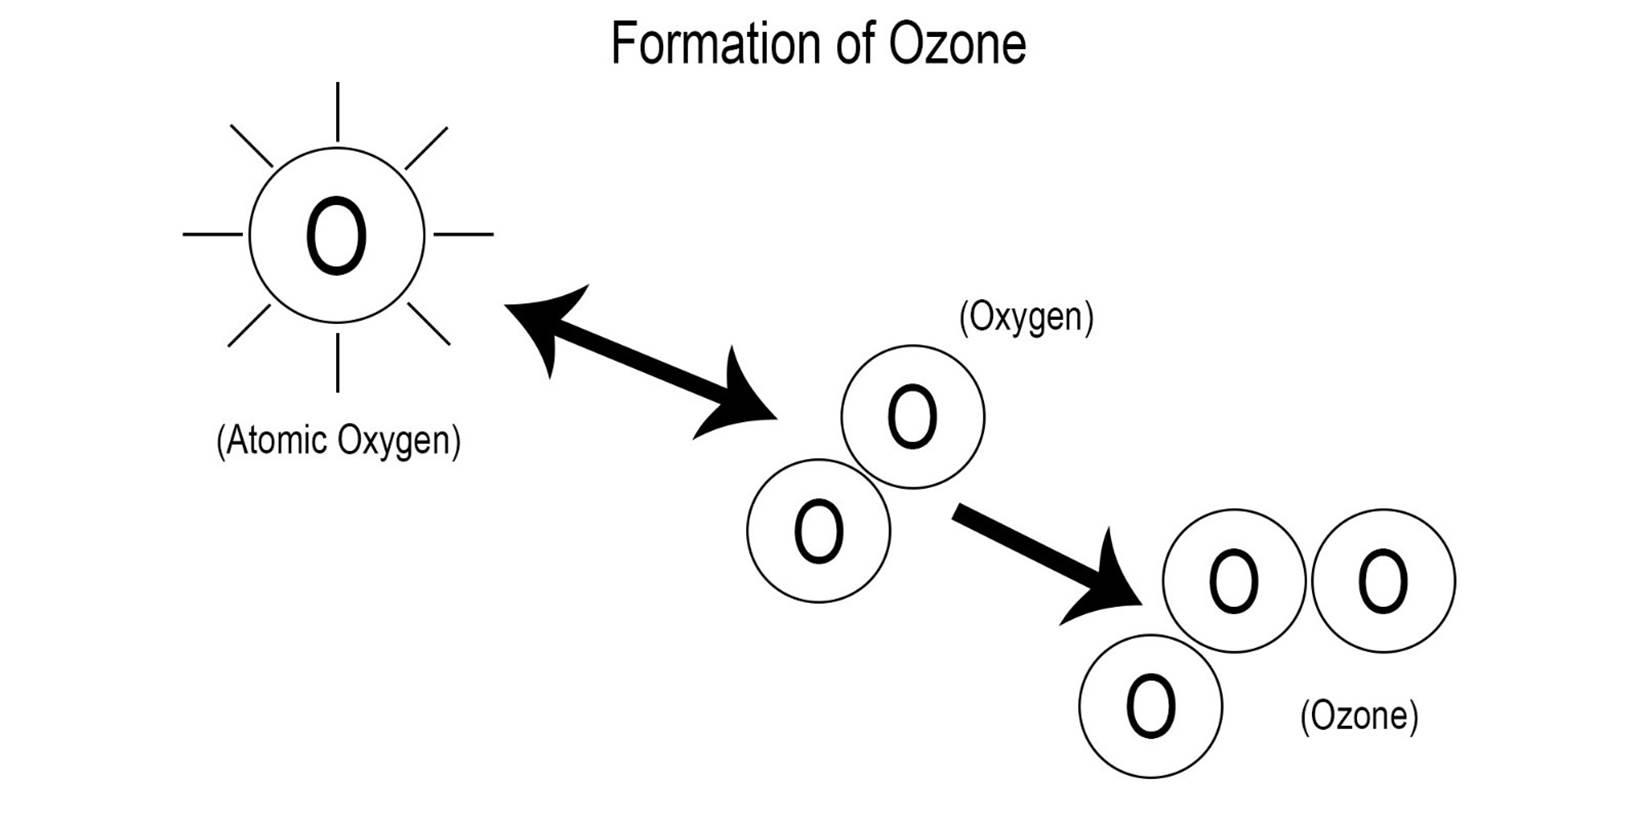 ozone main toxicant photochemic al smog